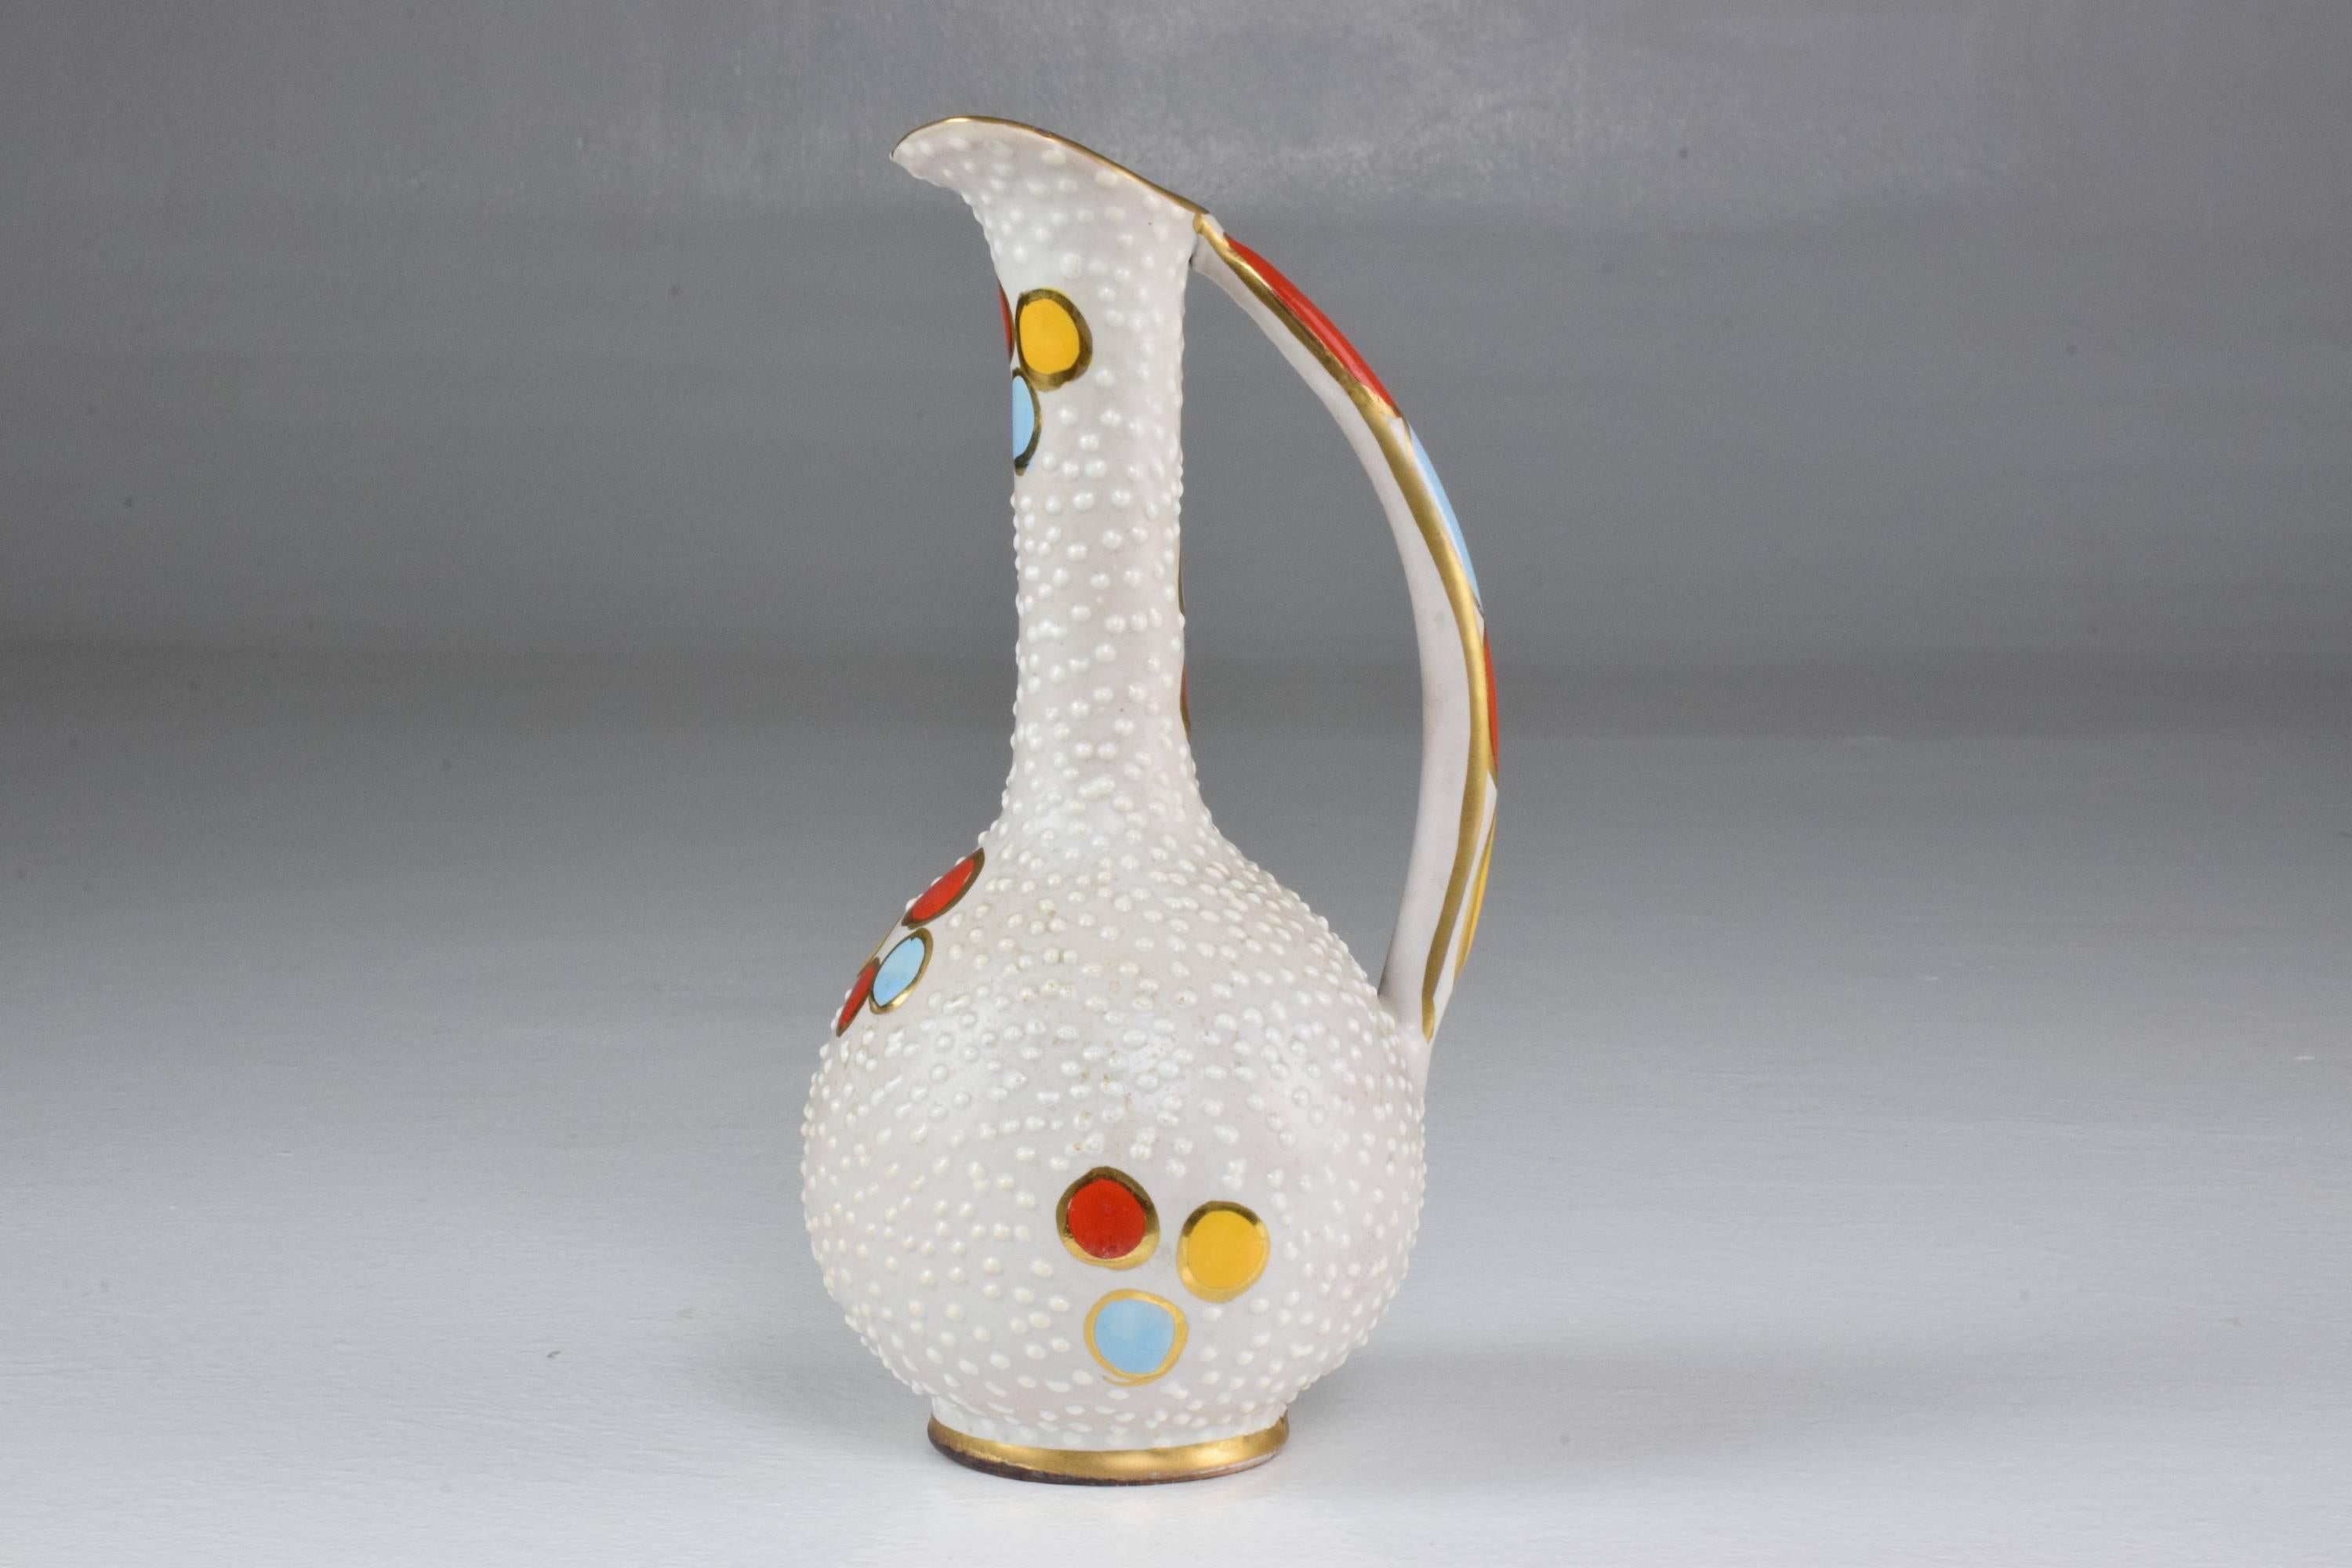 Ceramic Italian Vintage Midcentury Decorative Pitcher